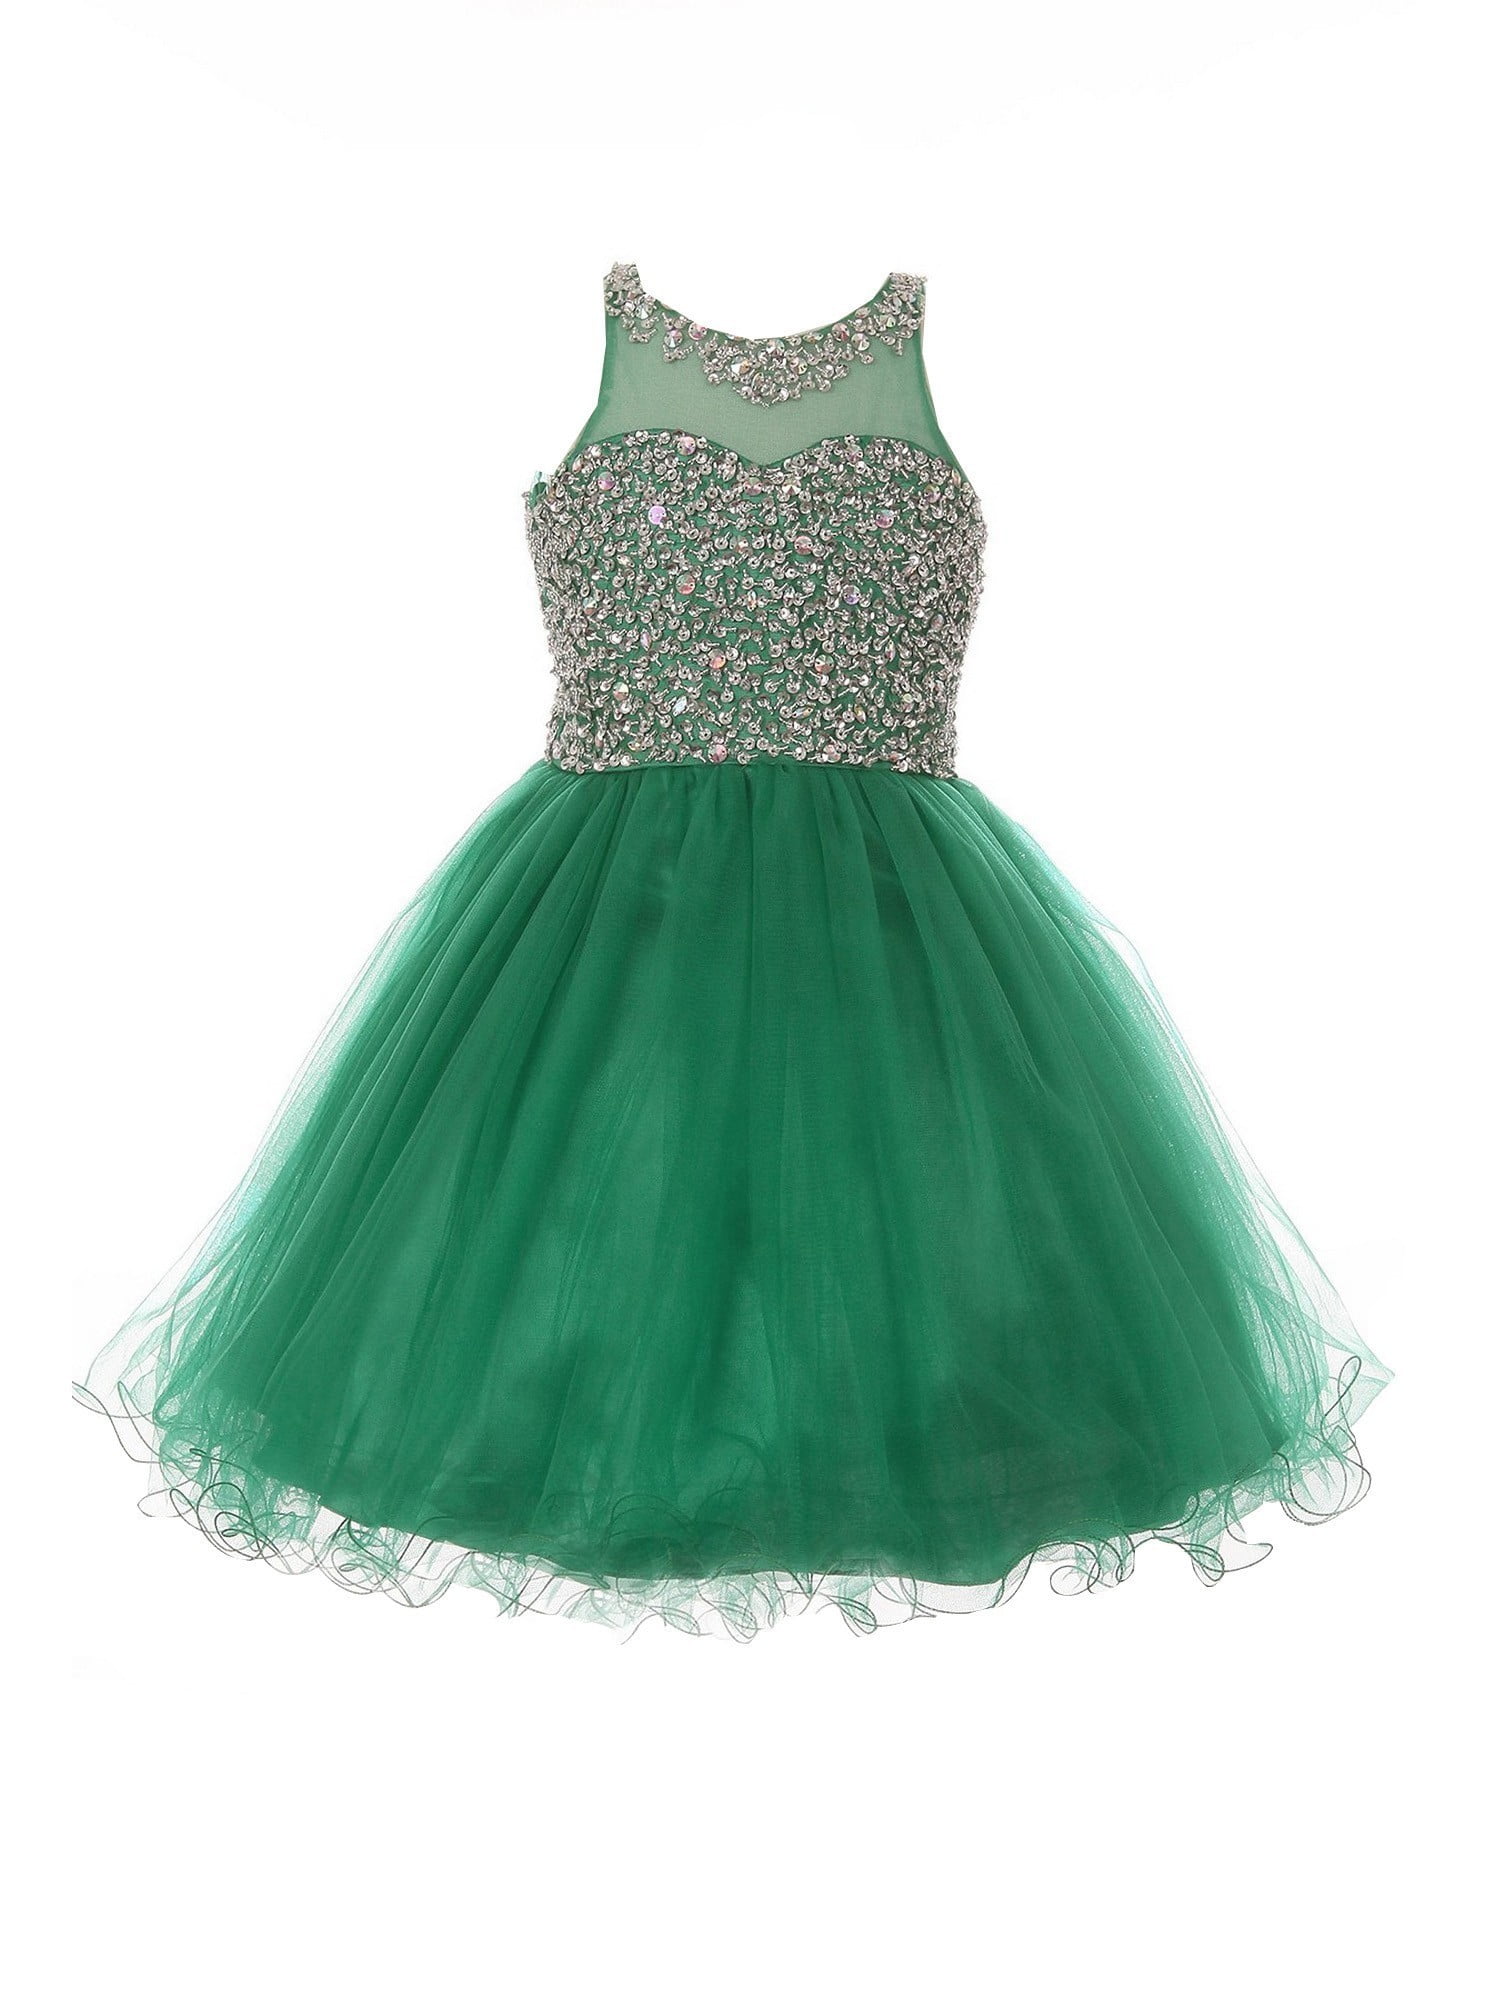 emerald green dress for baby girl